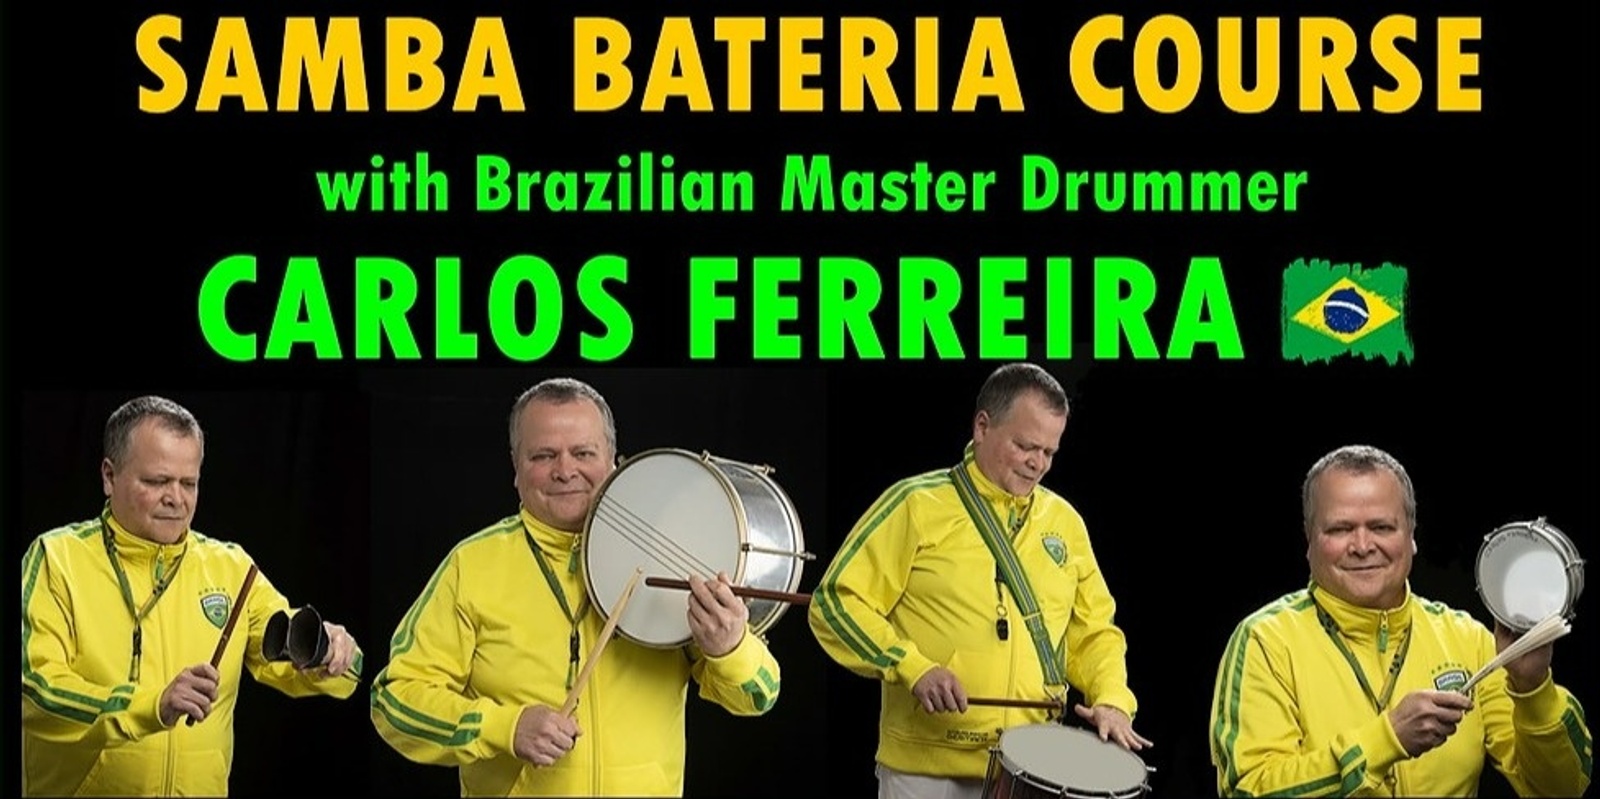 Samba Bateria Course - with Brazilian Master Drummer Carlos Ferreira